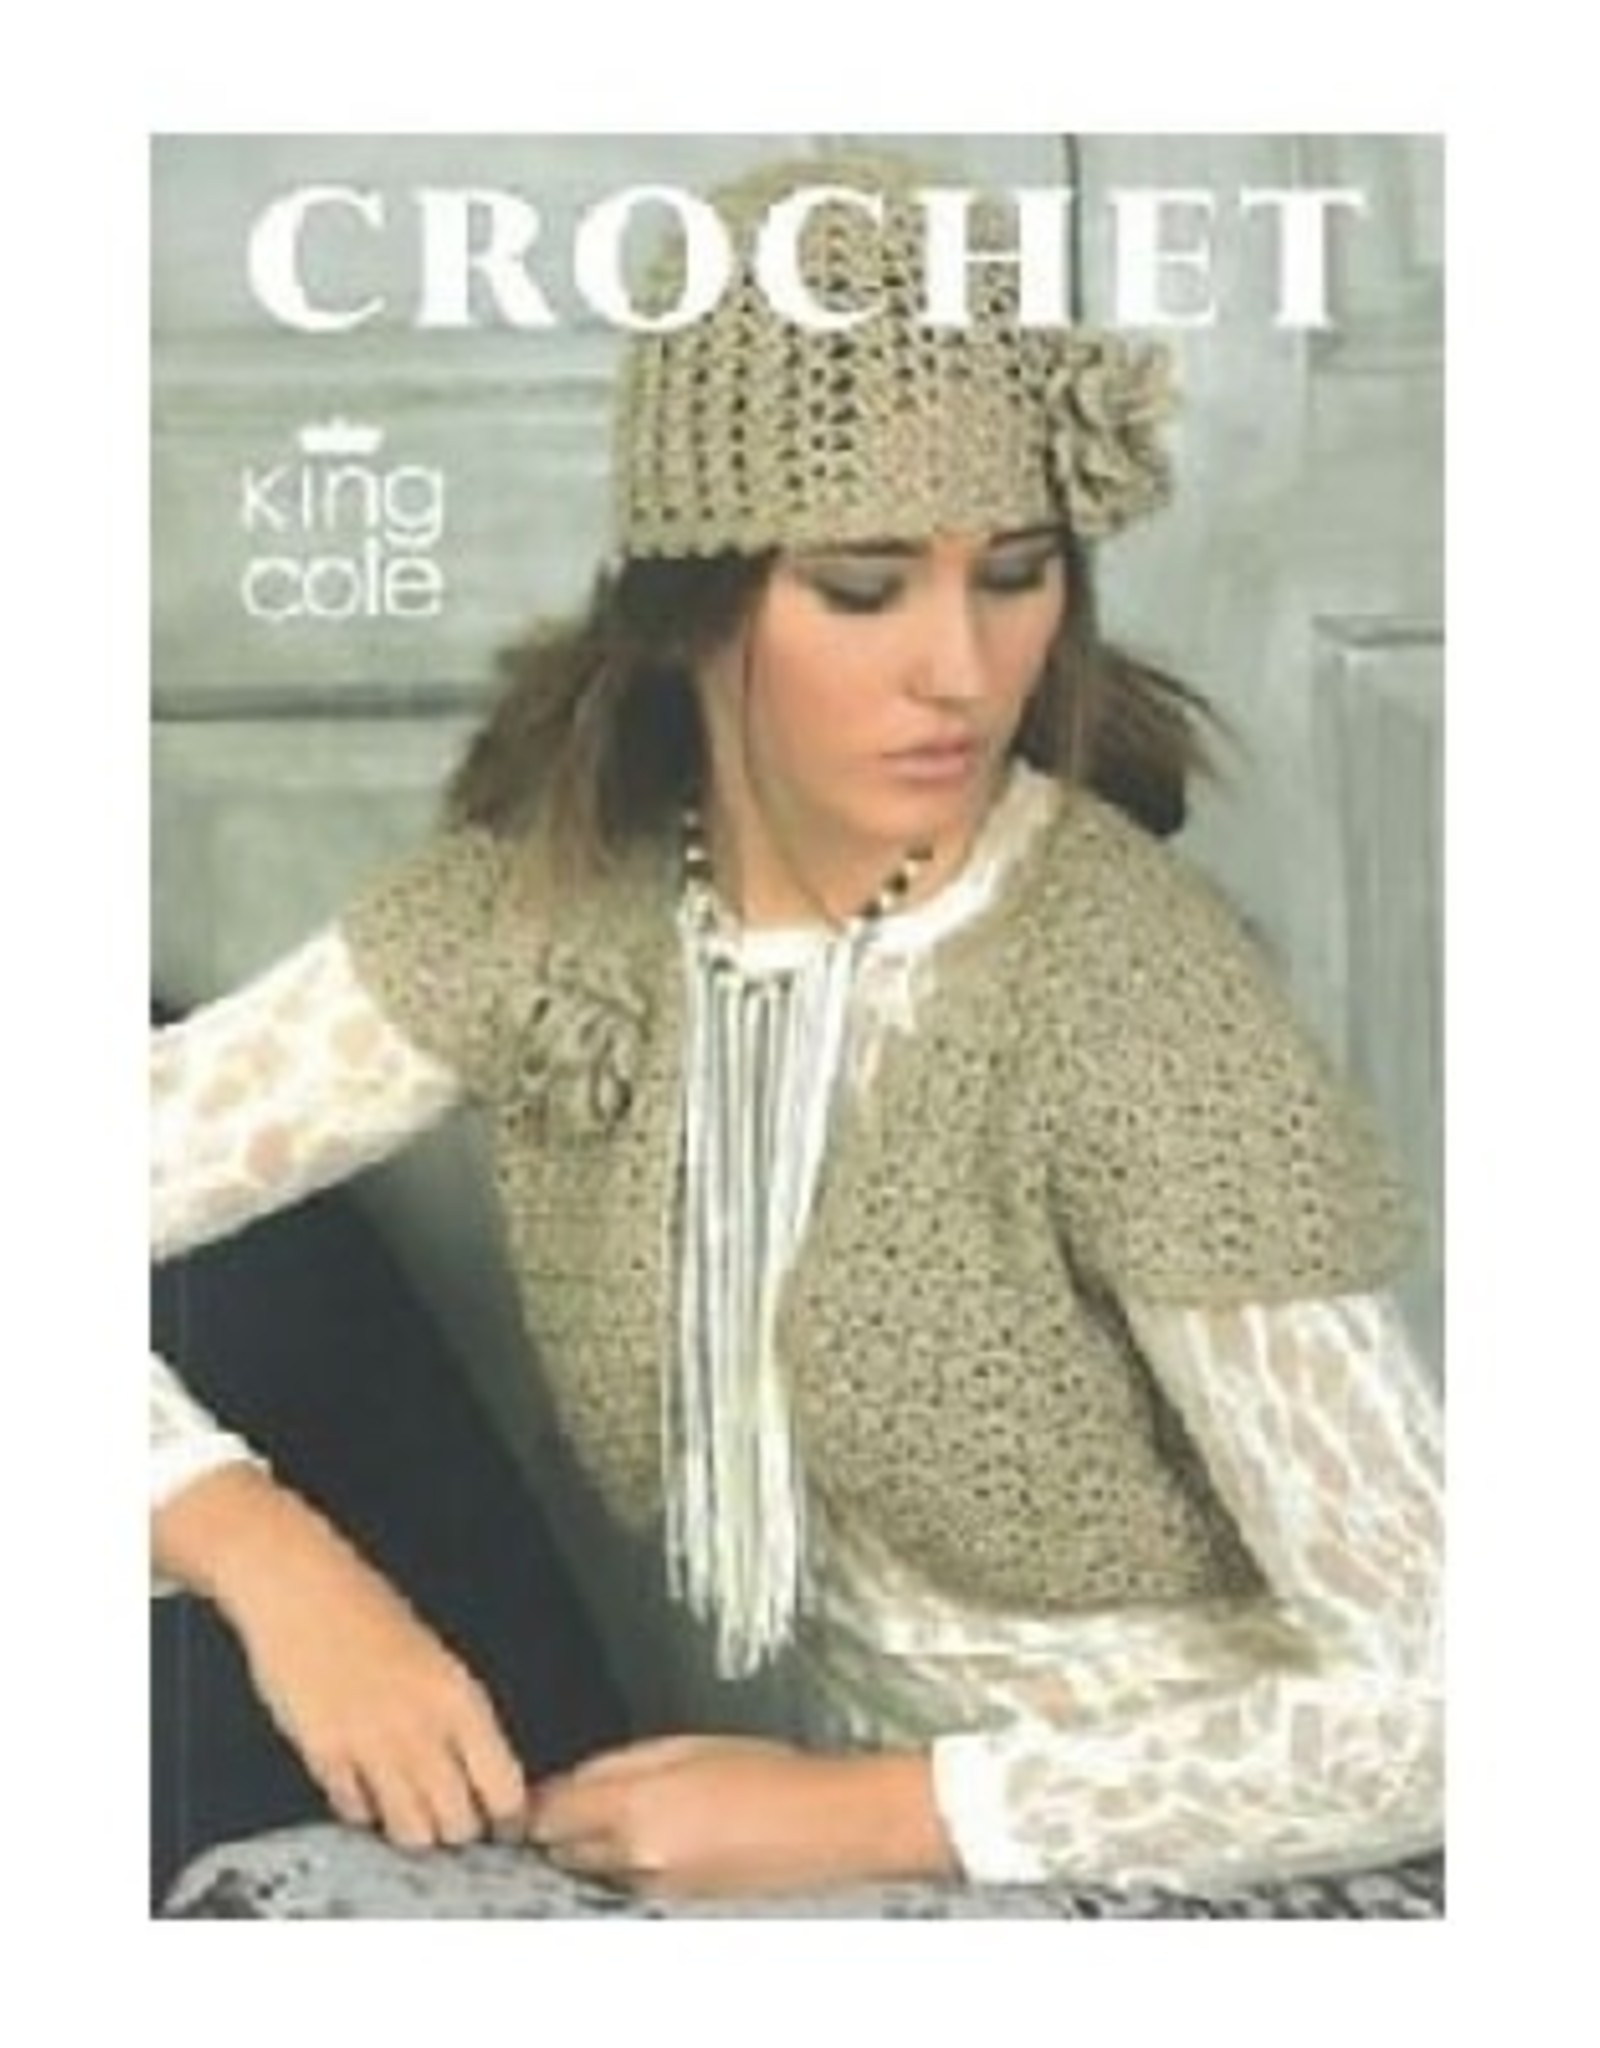 King Cole Crochet Book